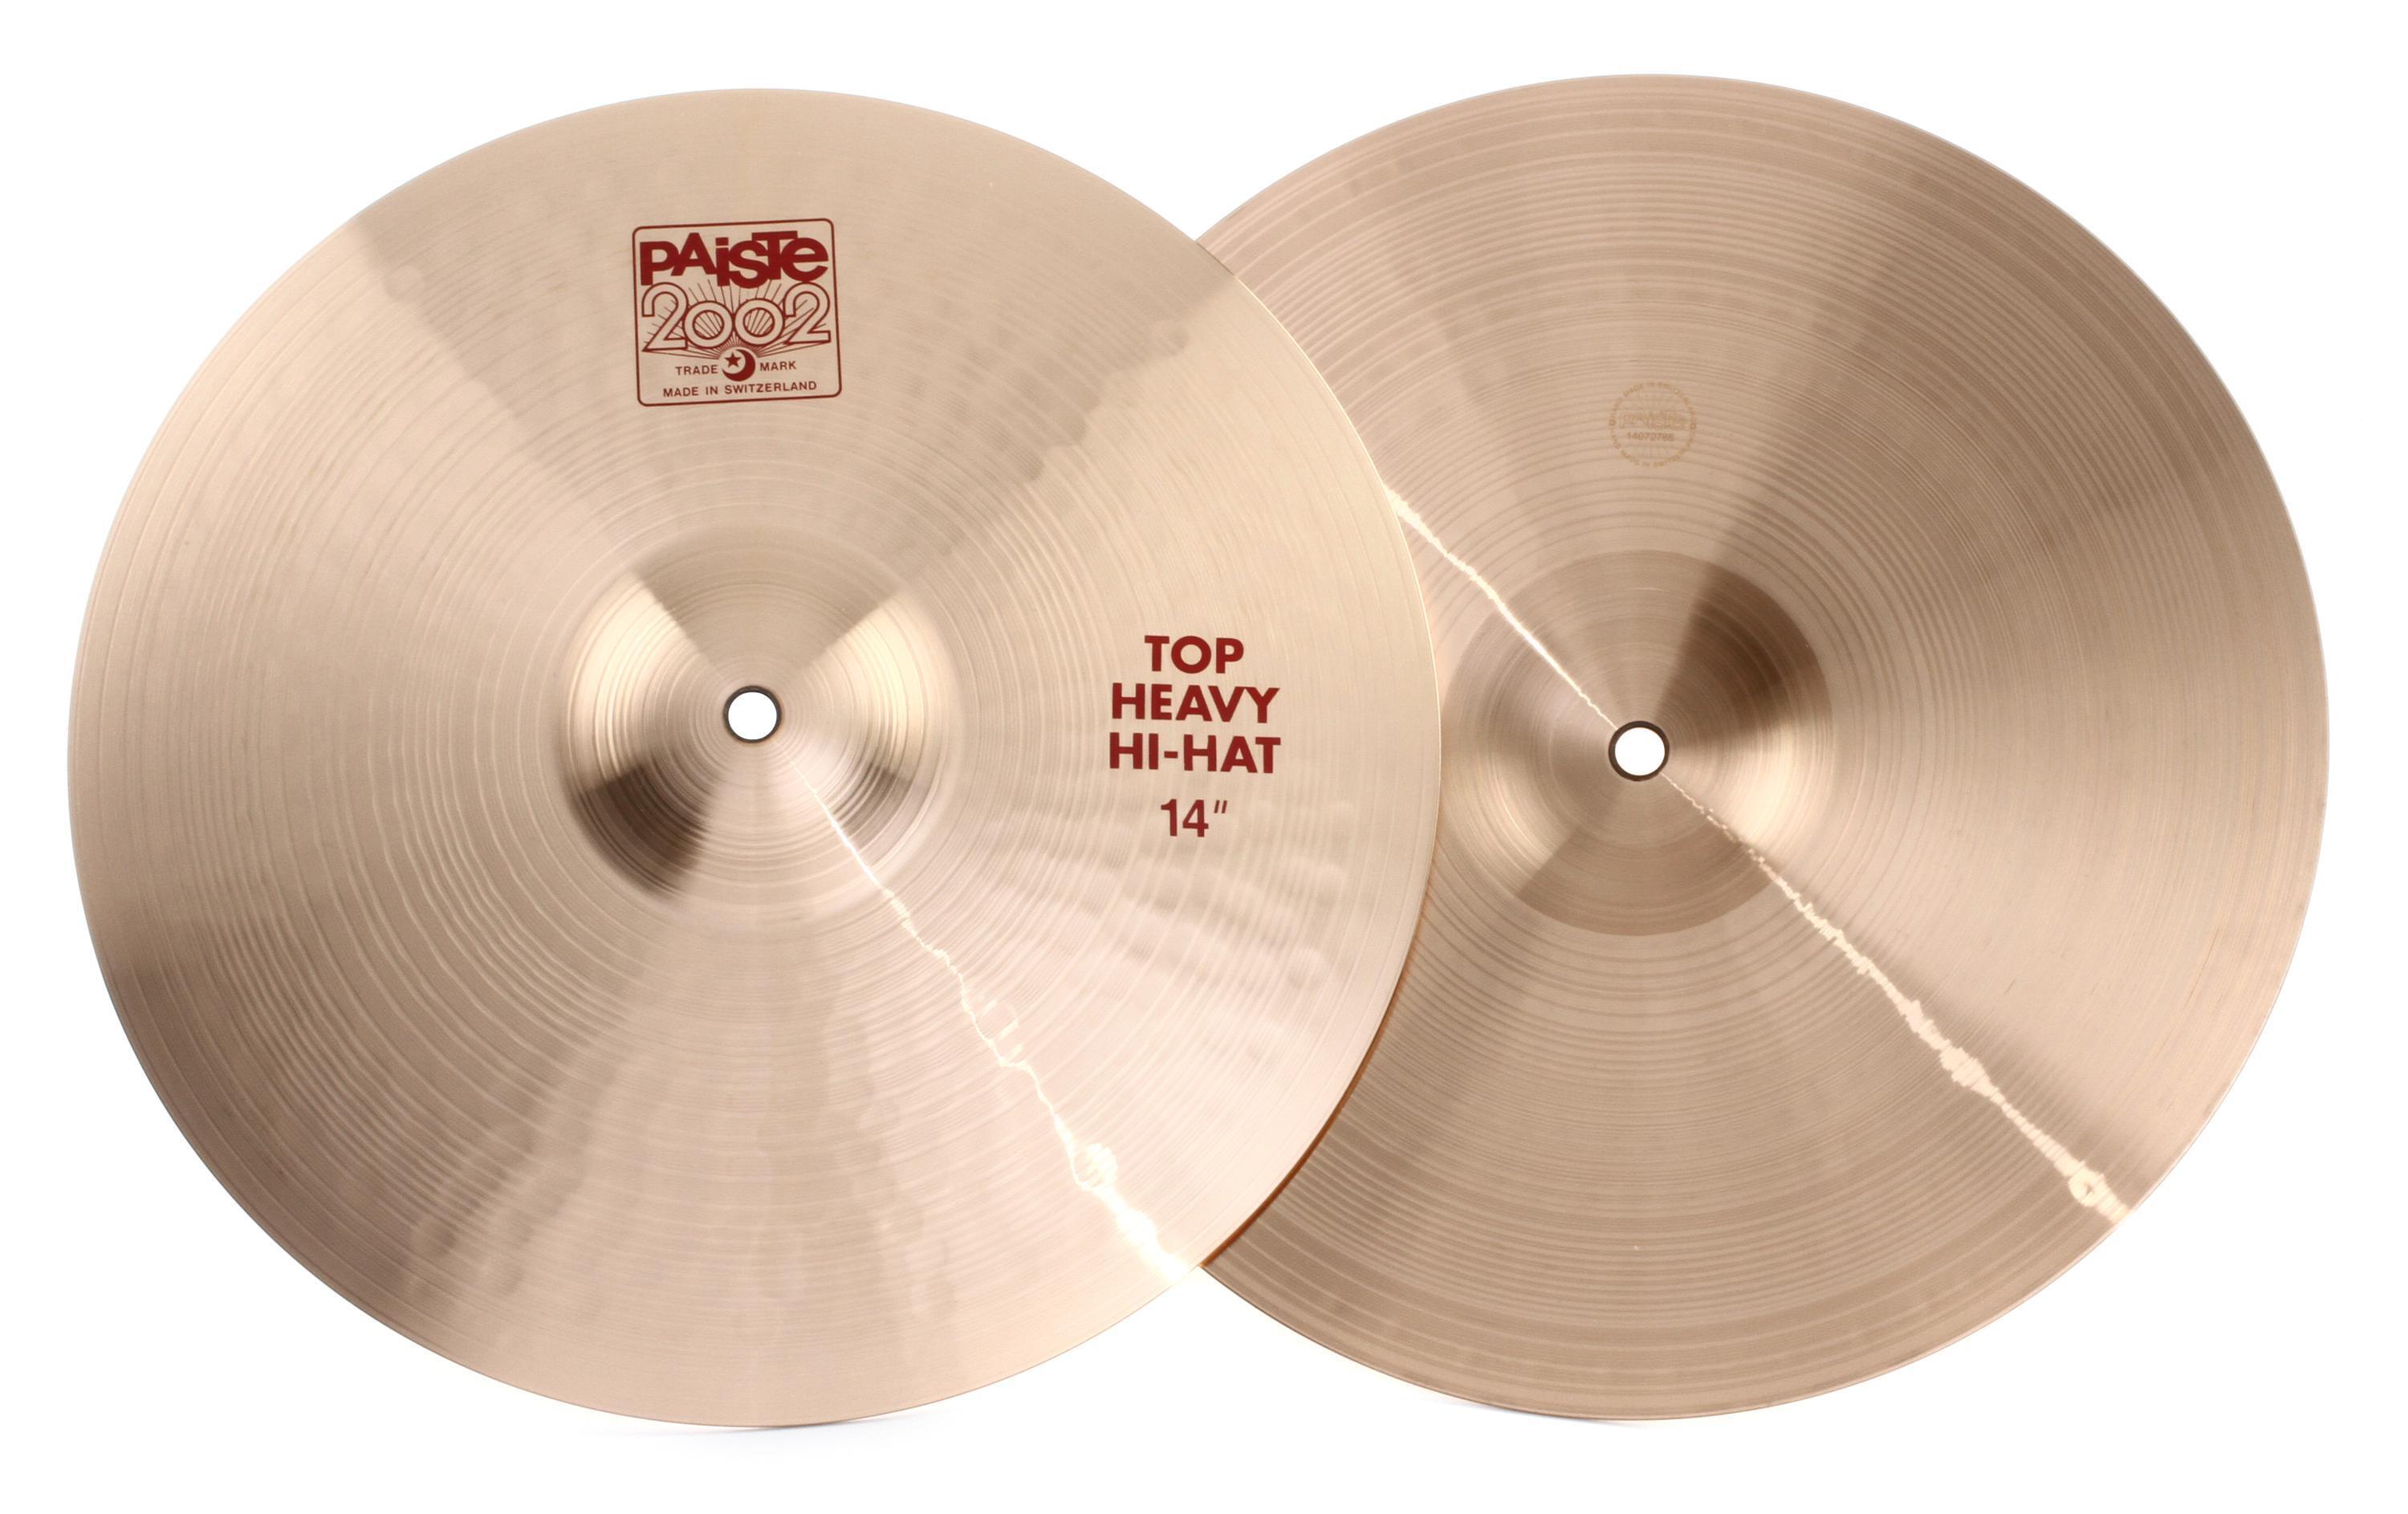 Paiste 14-inch 2002 Heavy Hi-hat Cymbals